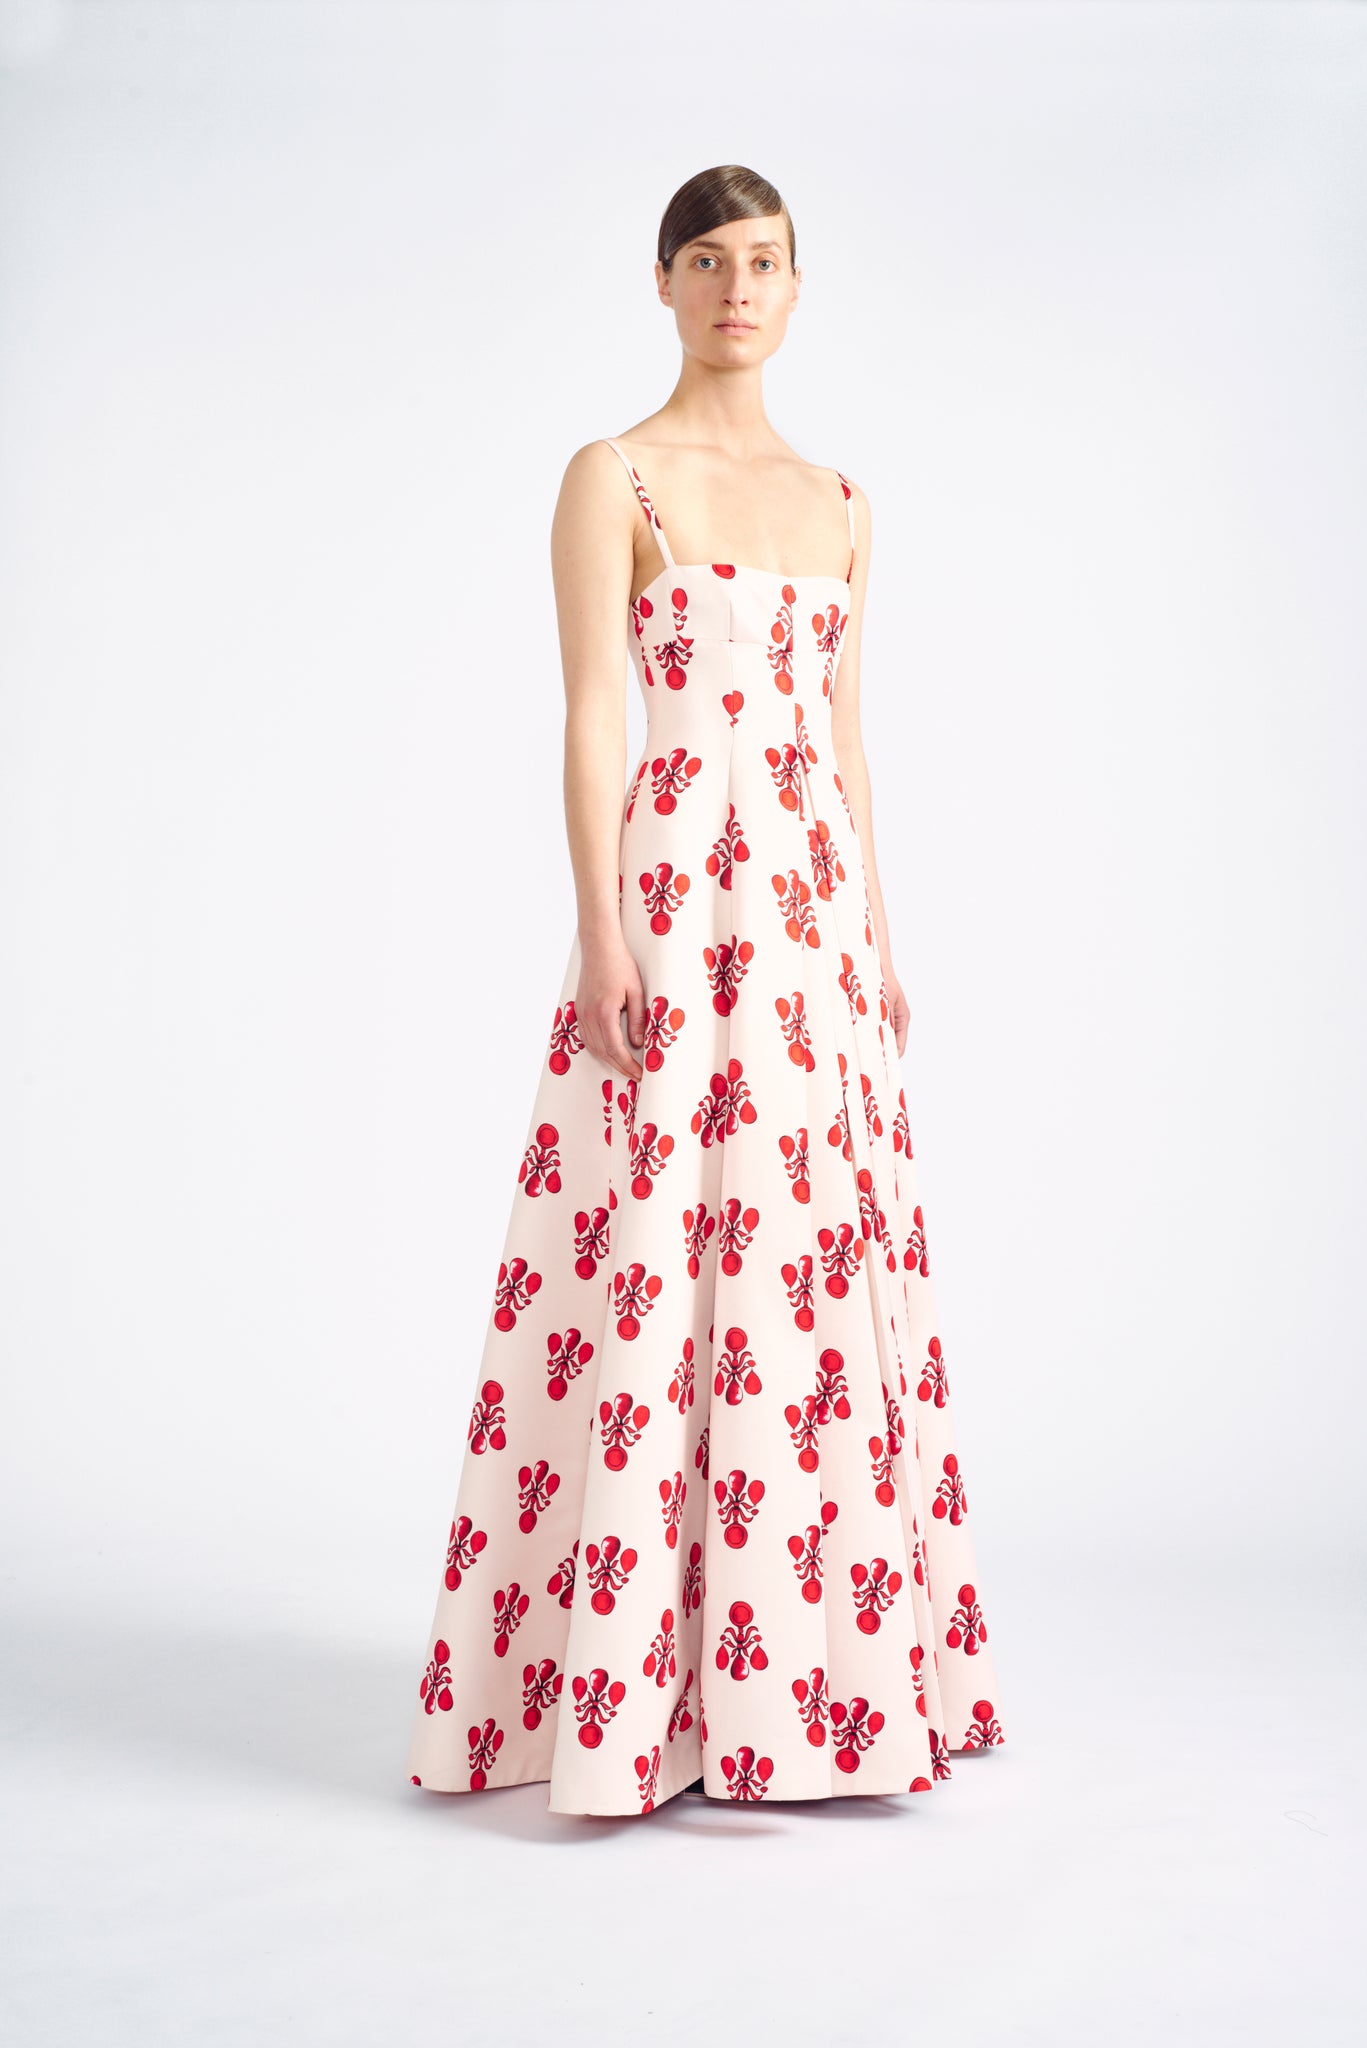 Oceana Gown: Pink and Red Jewel Print Evening Dress | Emilia Wickstead